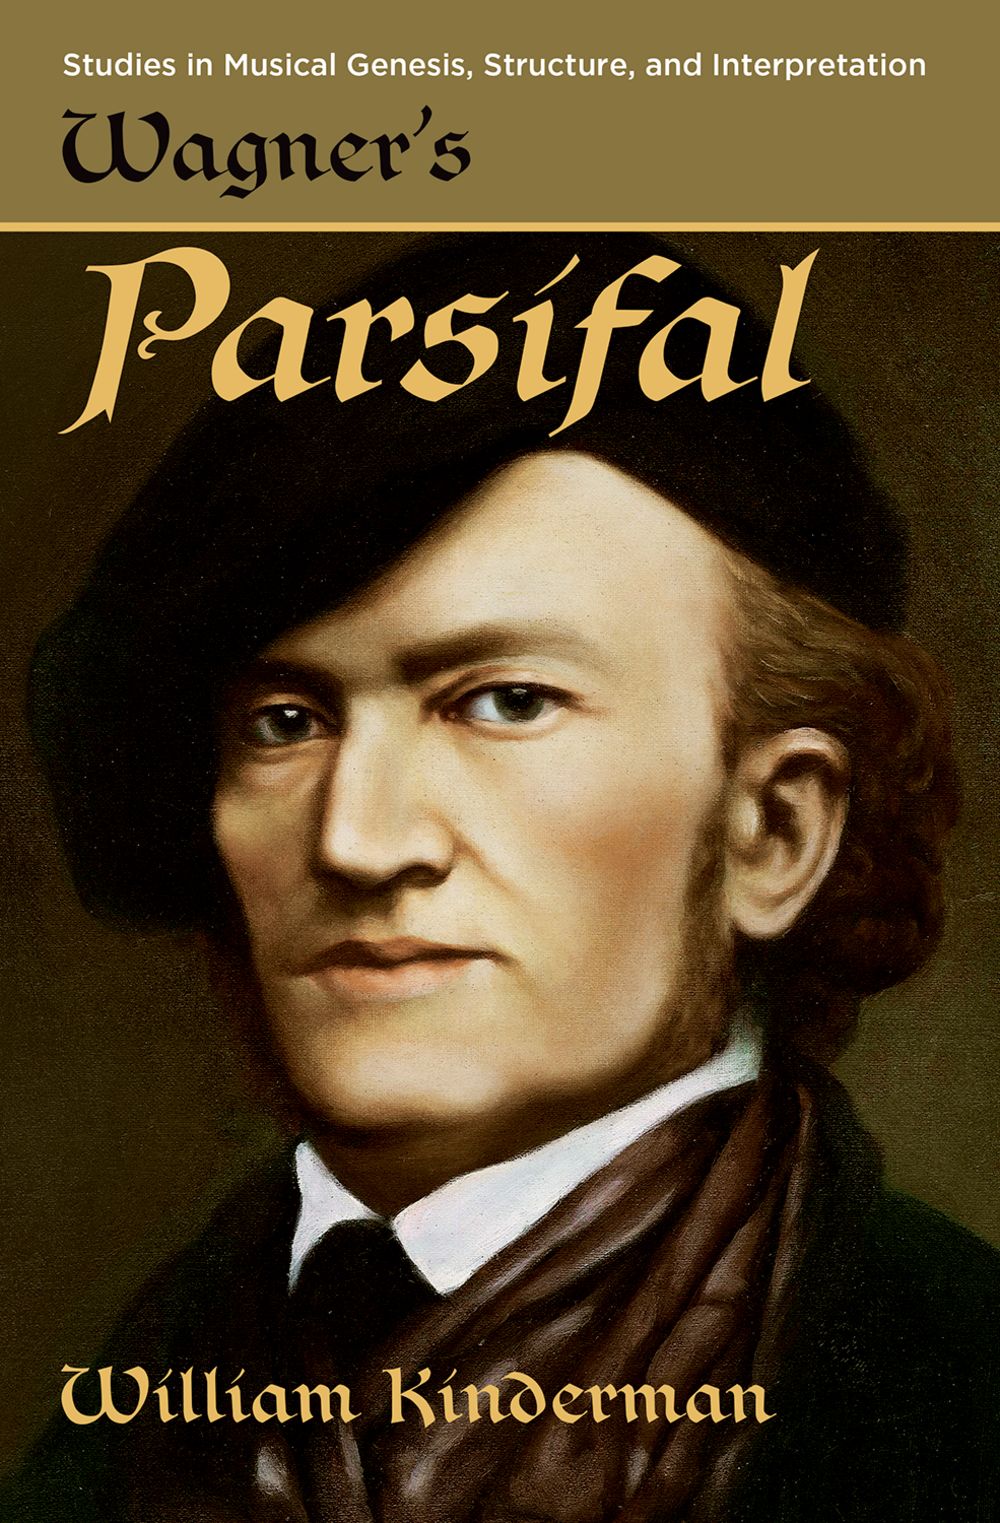 Kidnerman Wagners Parsifal Paperback Sheet Music Songbook